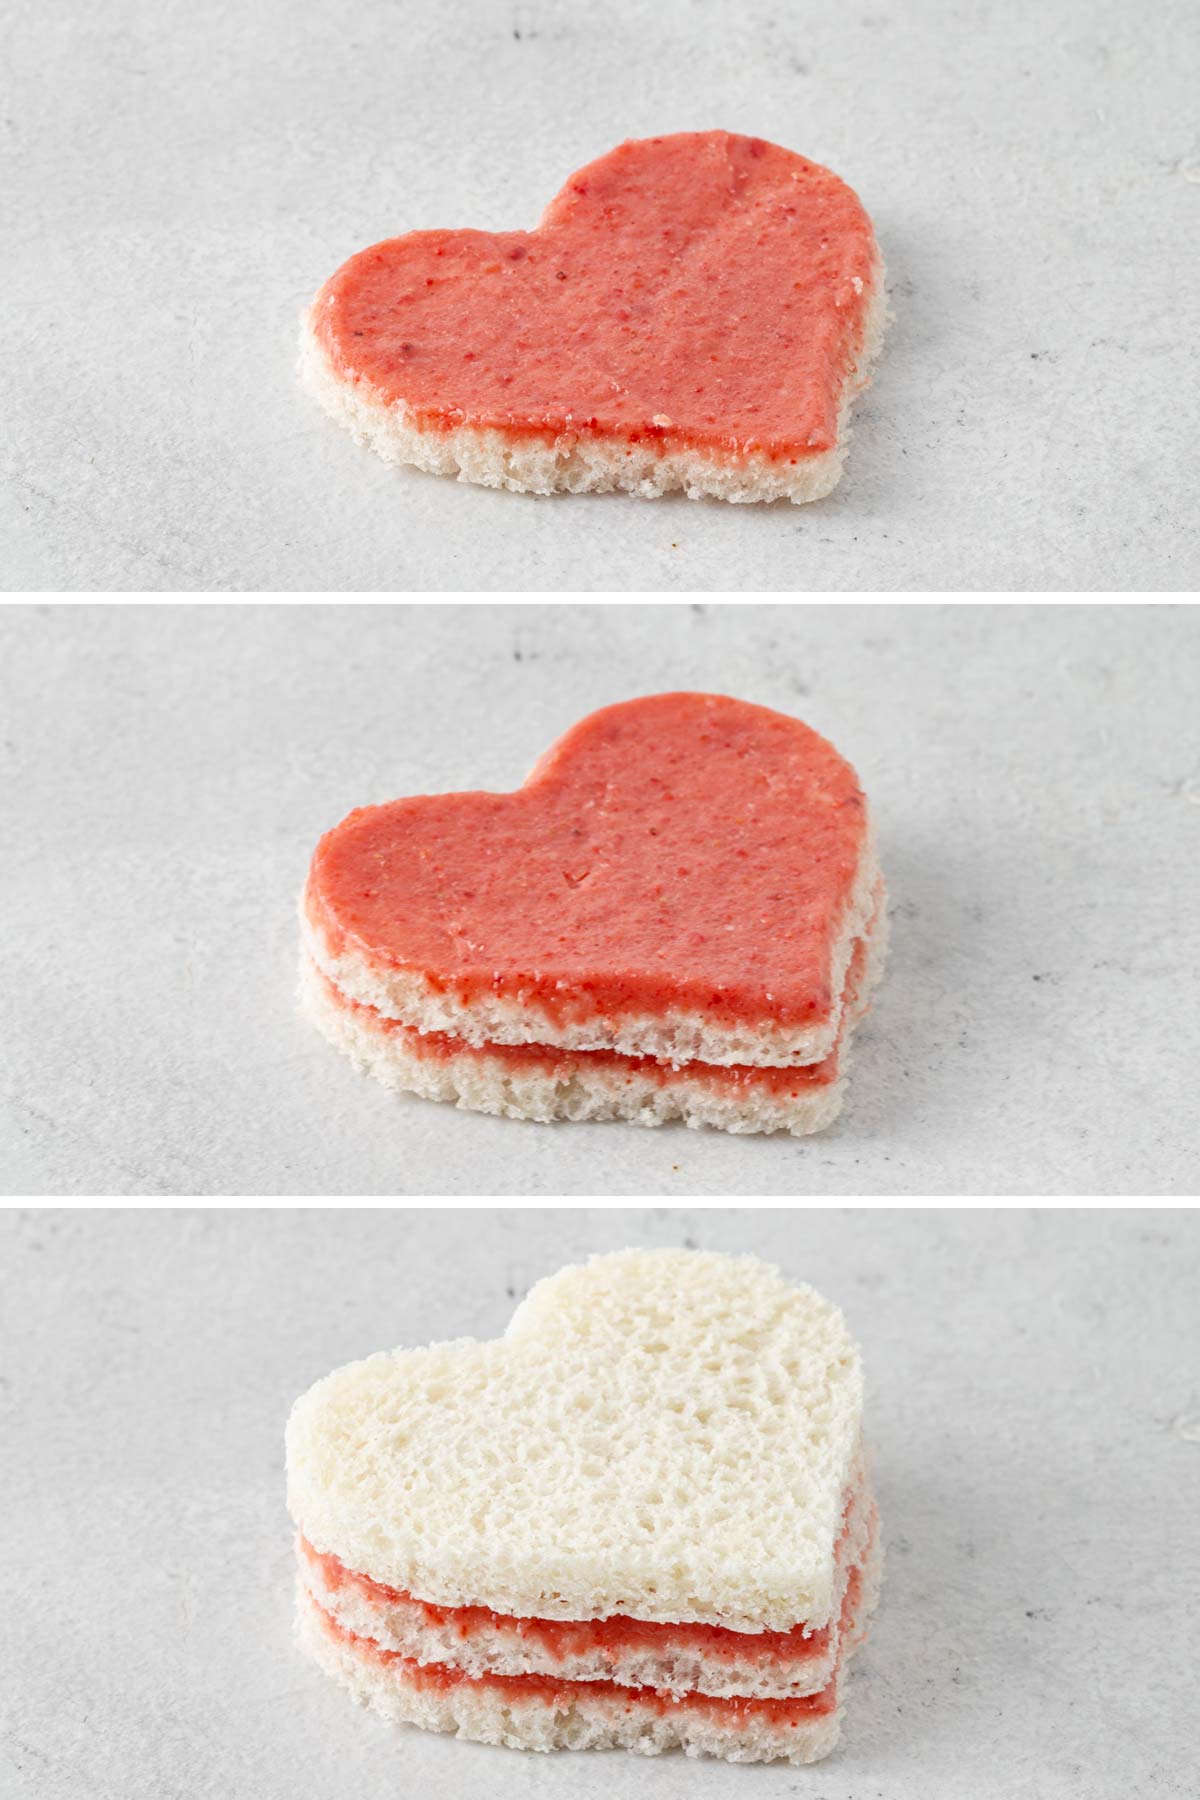 3 photos showing progression of making a heart tea sandwich.